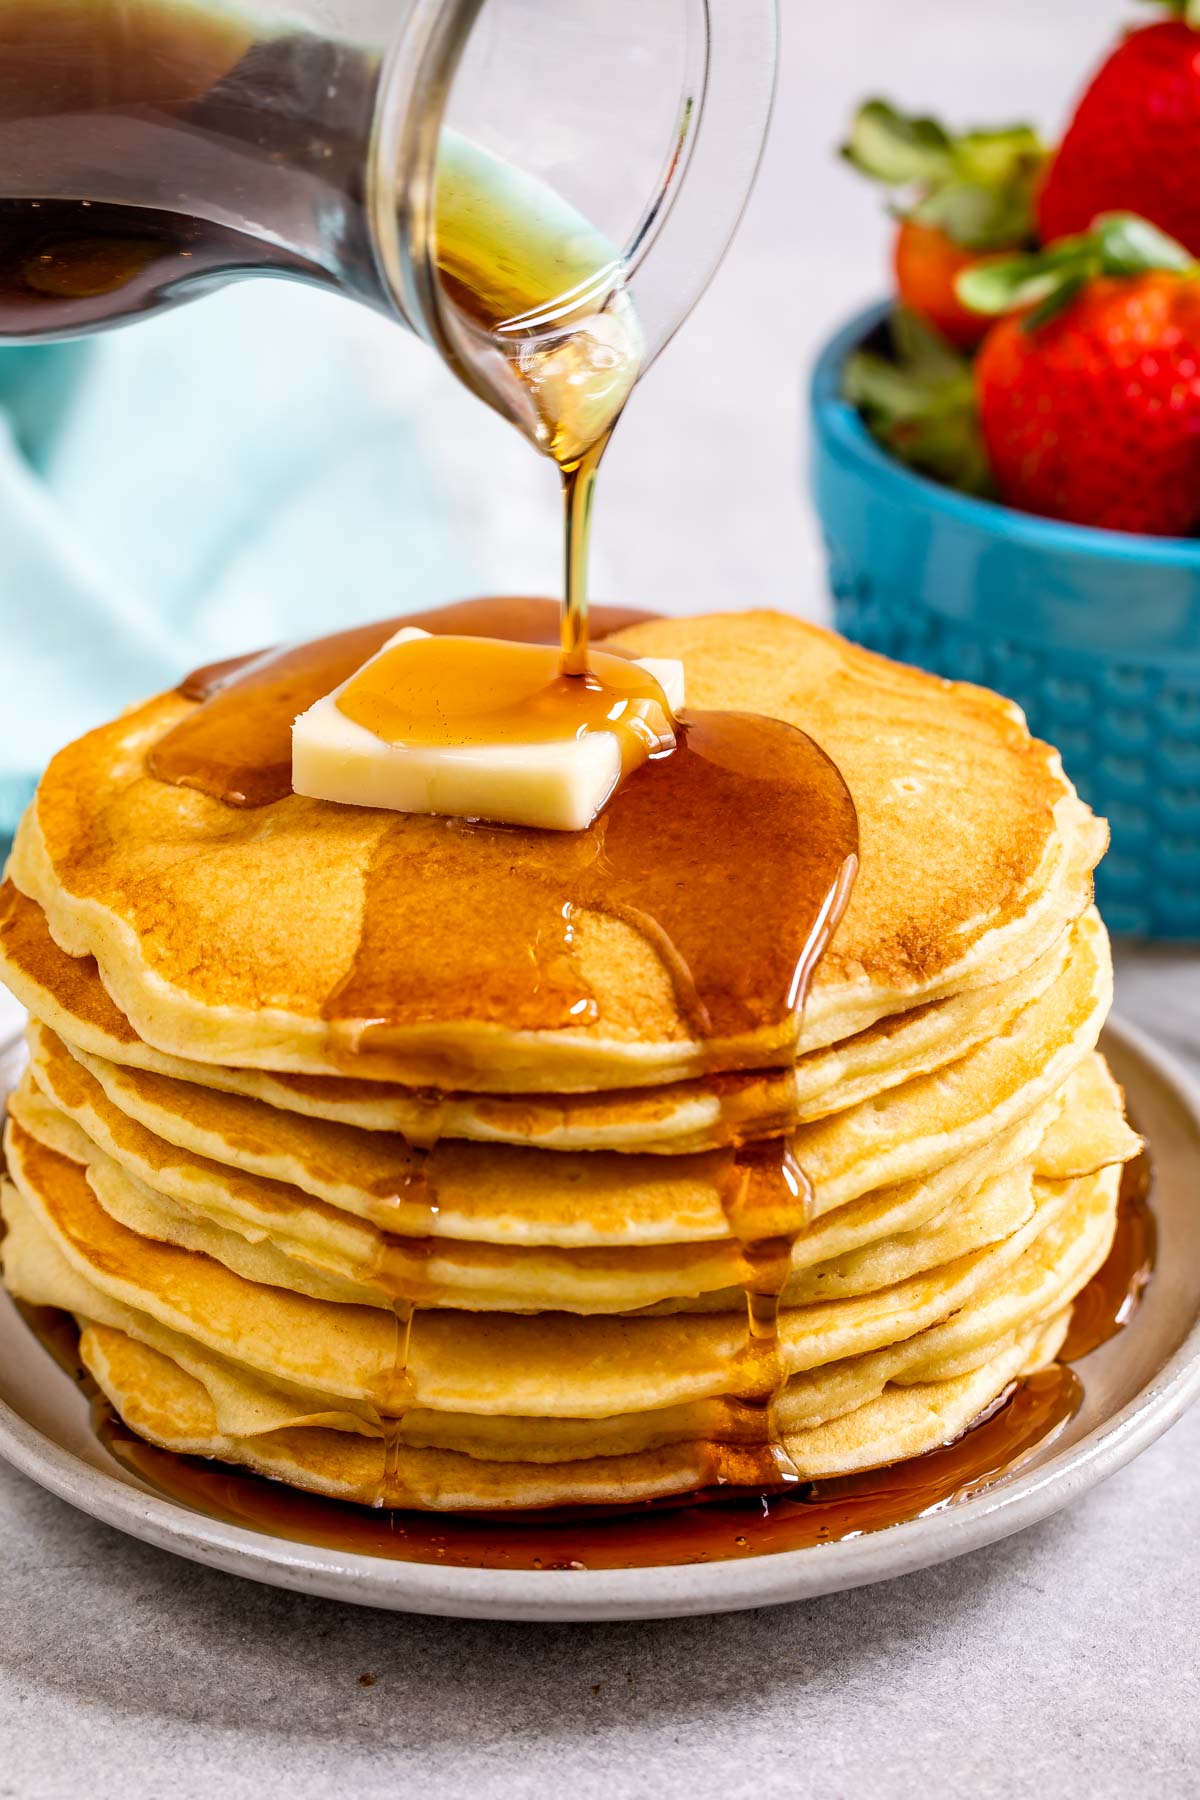 https://www.crazyforcrust.com/wp-content/uploads/2019/07/Easy-Fluffy-Pancakes-Recipe-3.jpg